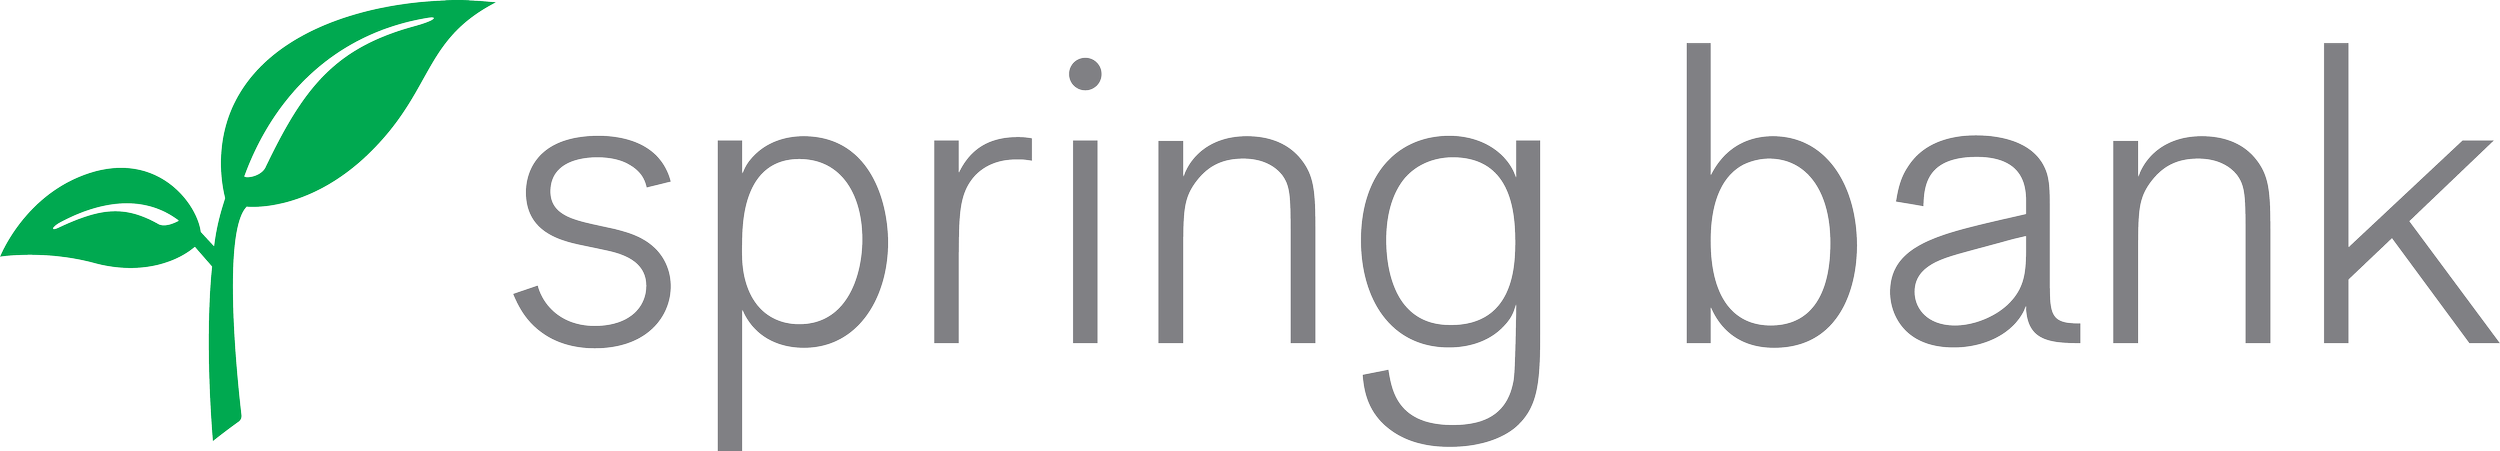 springbank-logo.png